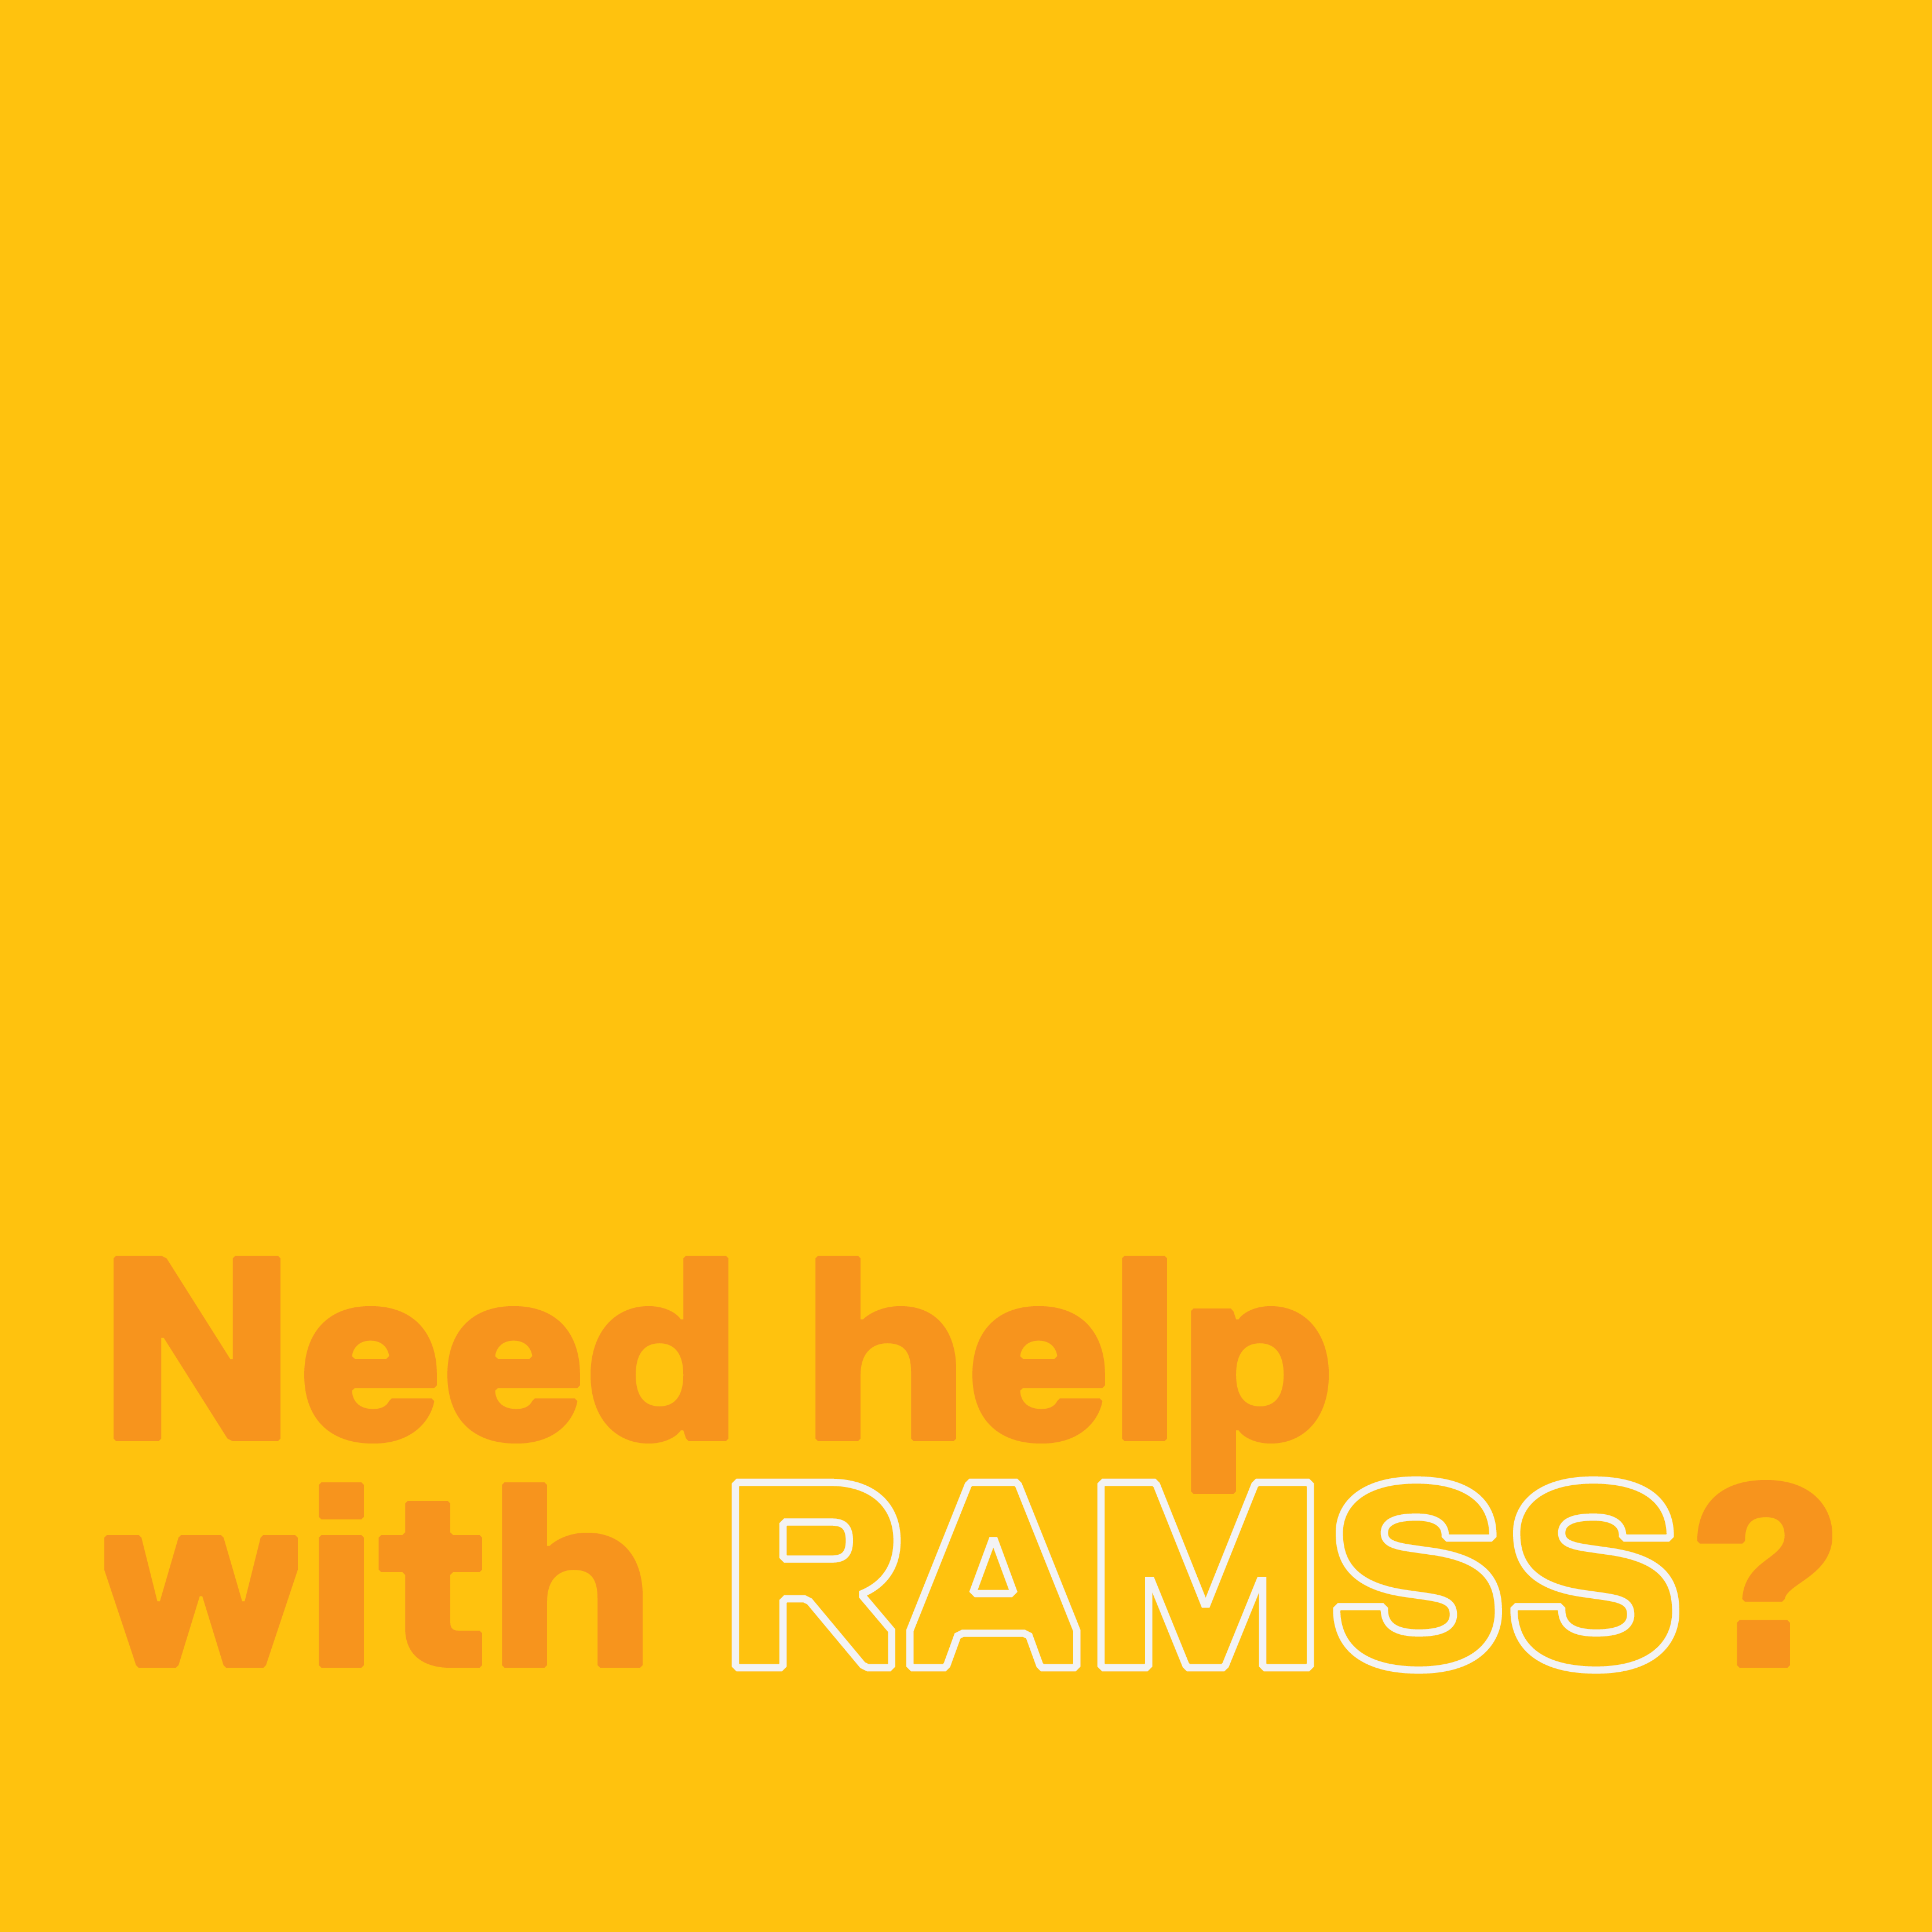 need help with RAMSS?